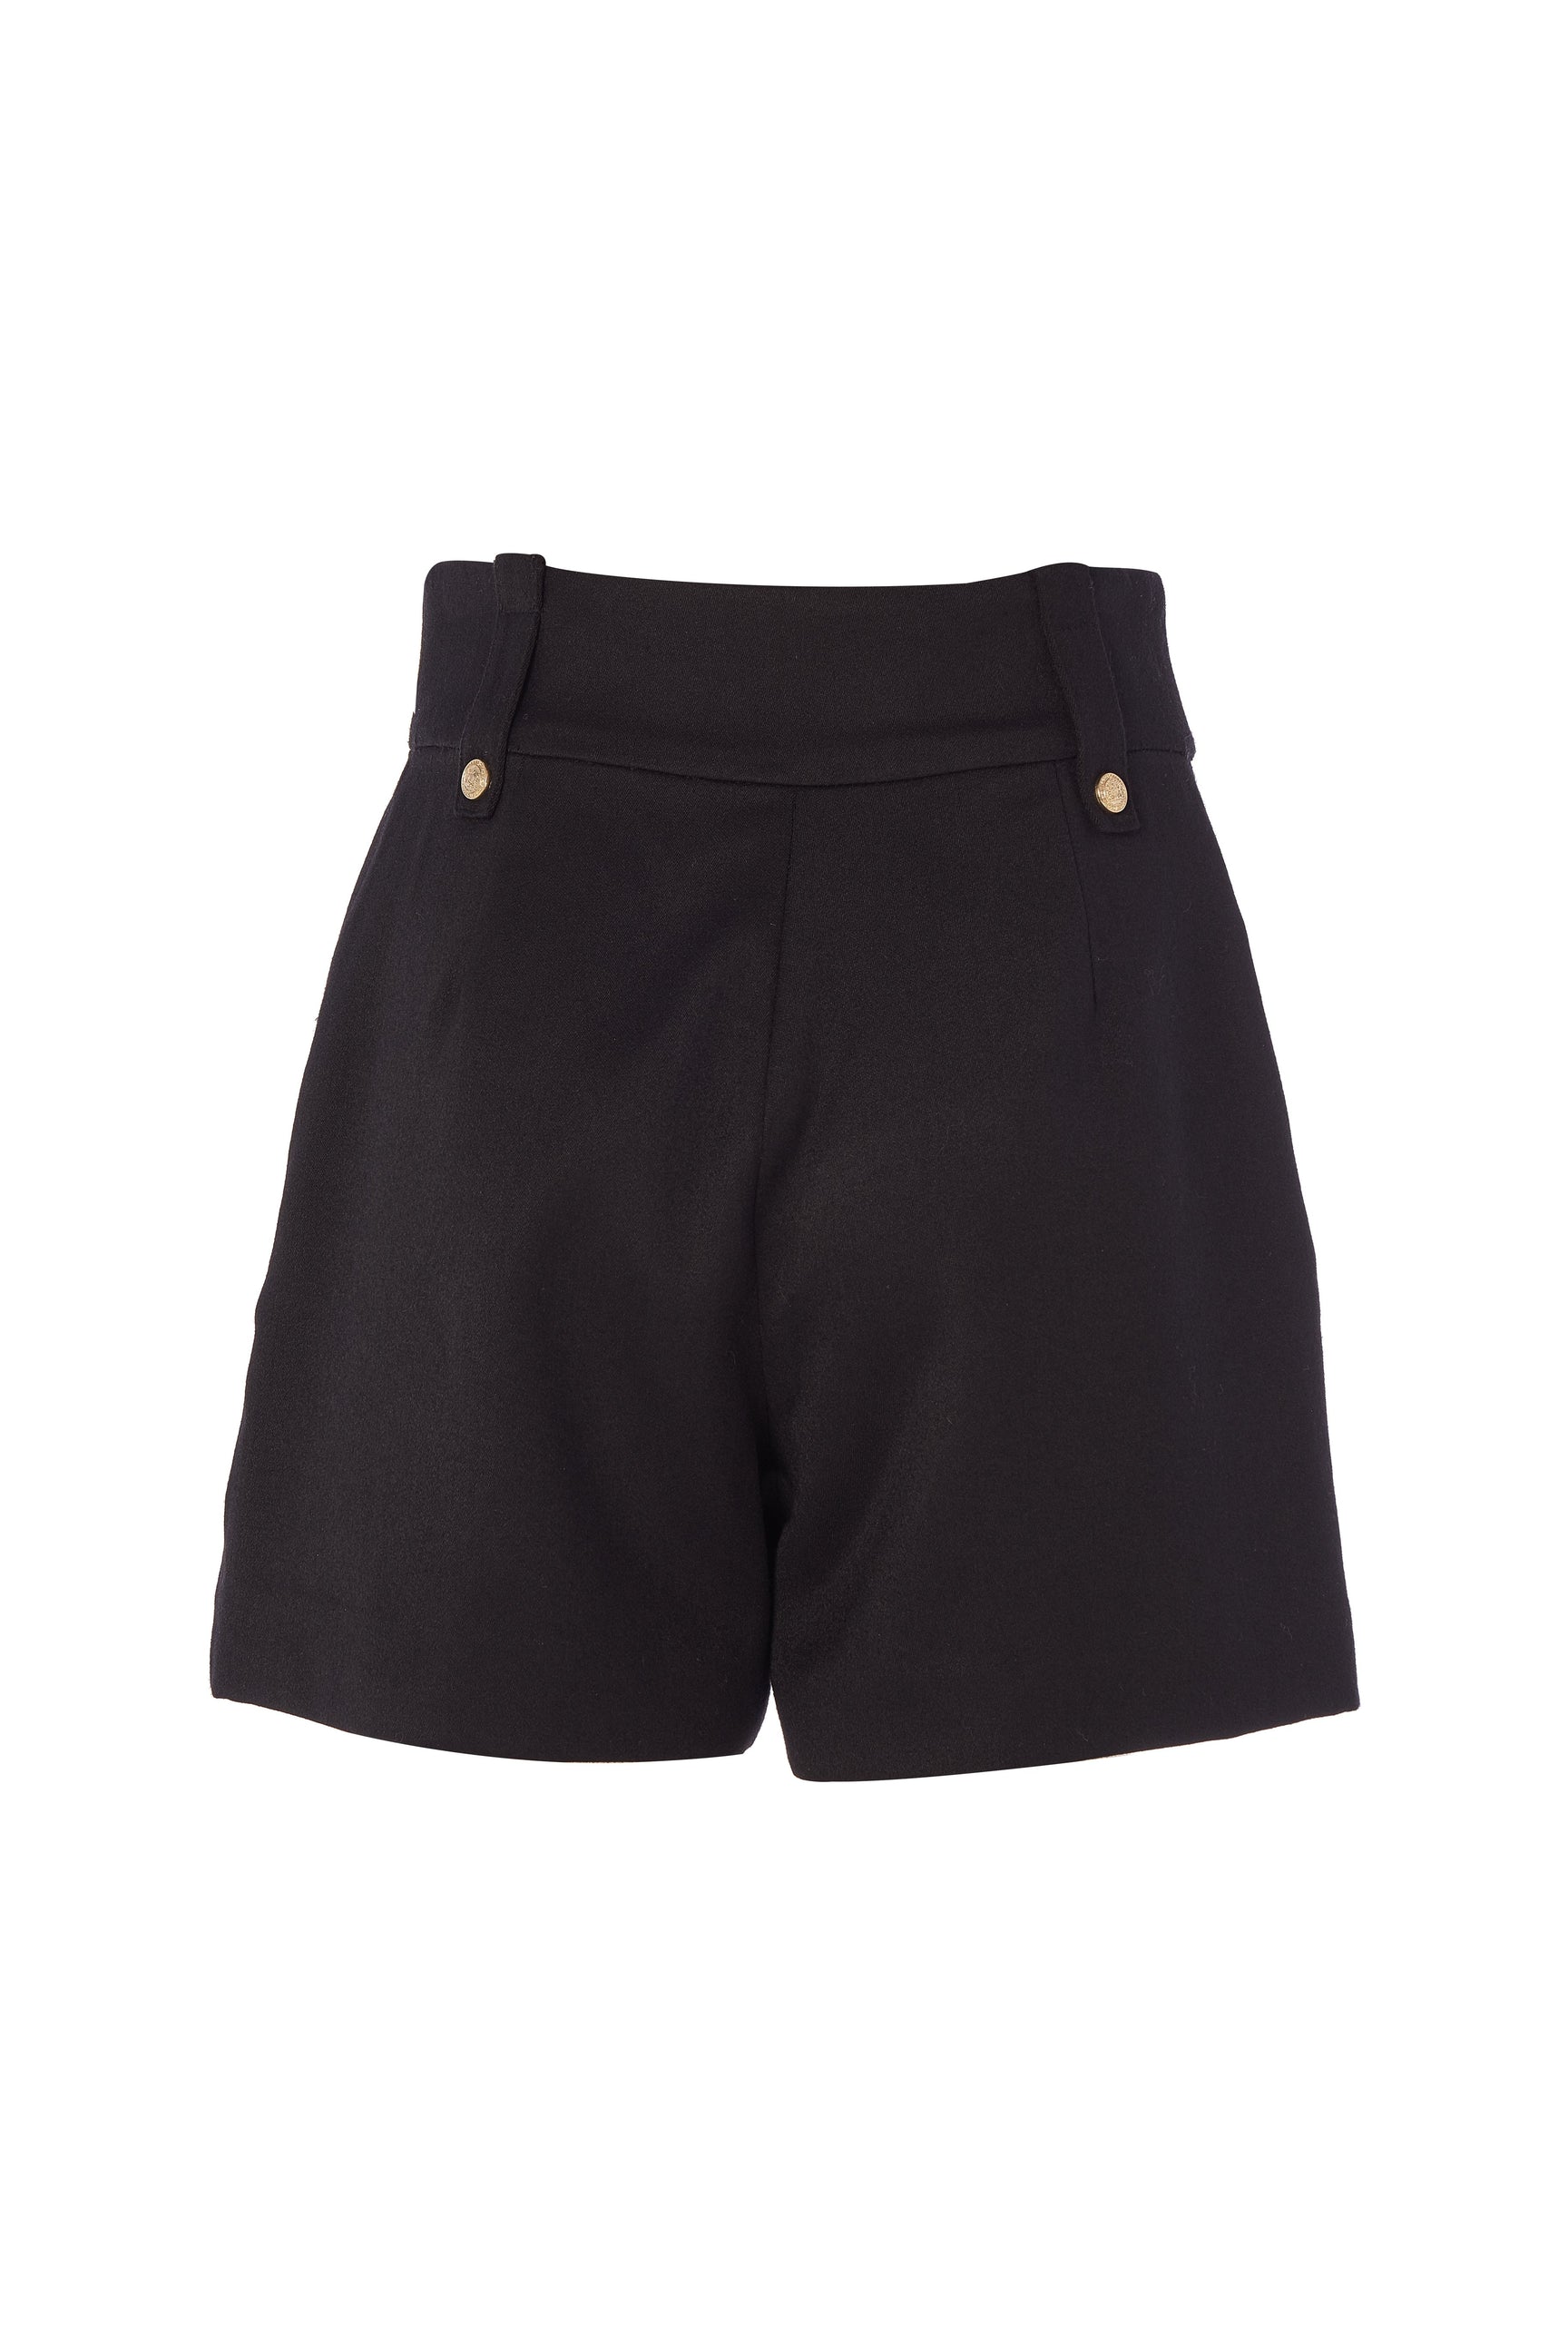 Luxe Tailored Short (Black Barathea) – Holland Cooper